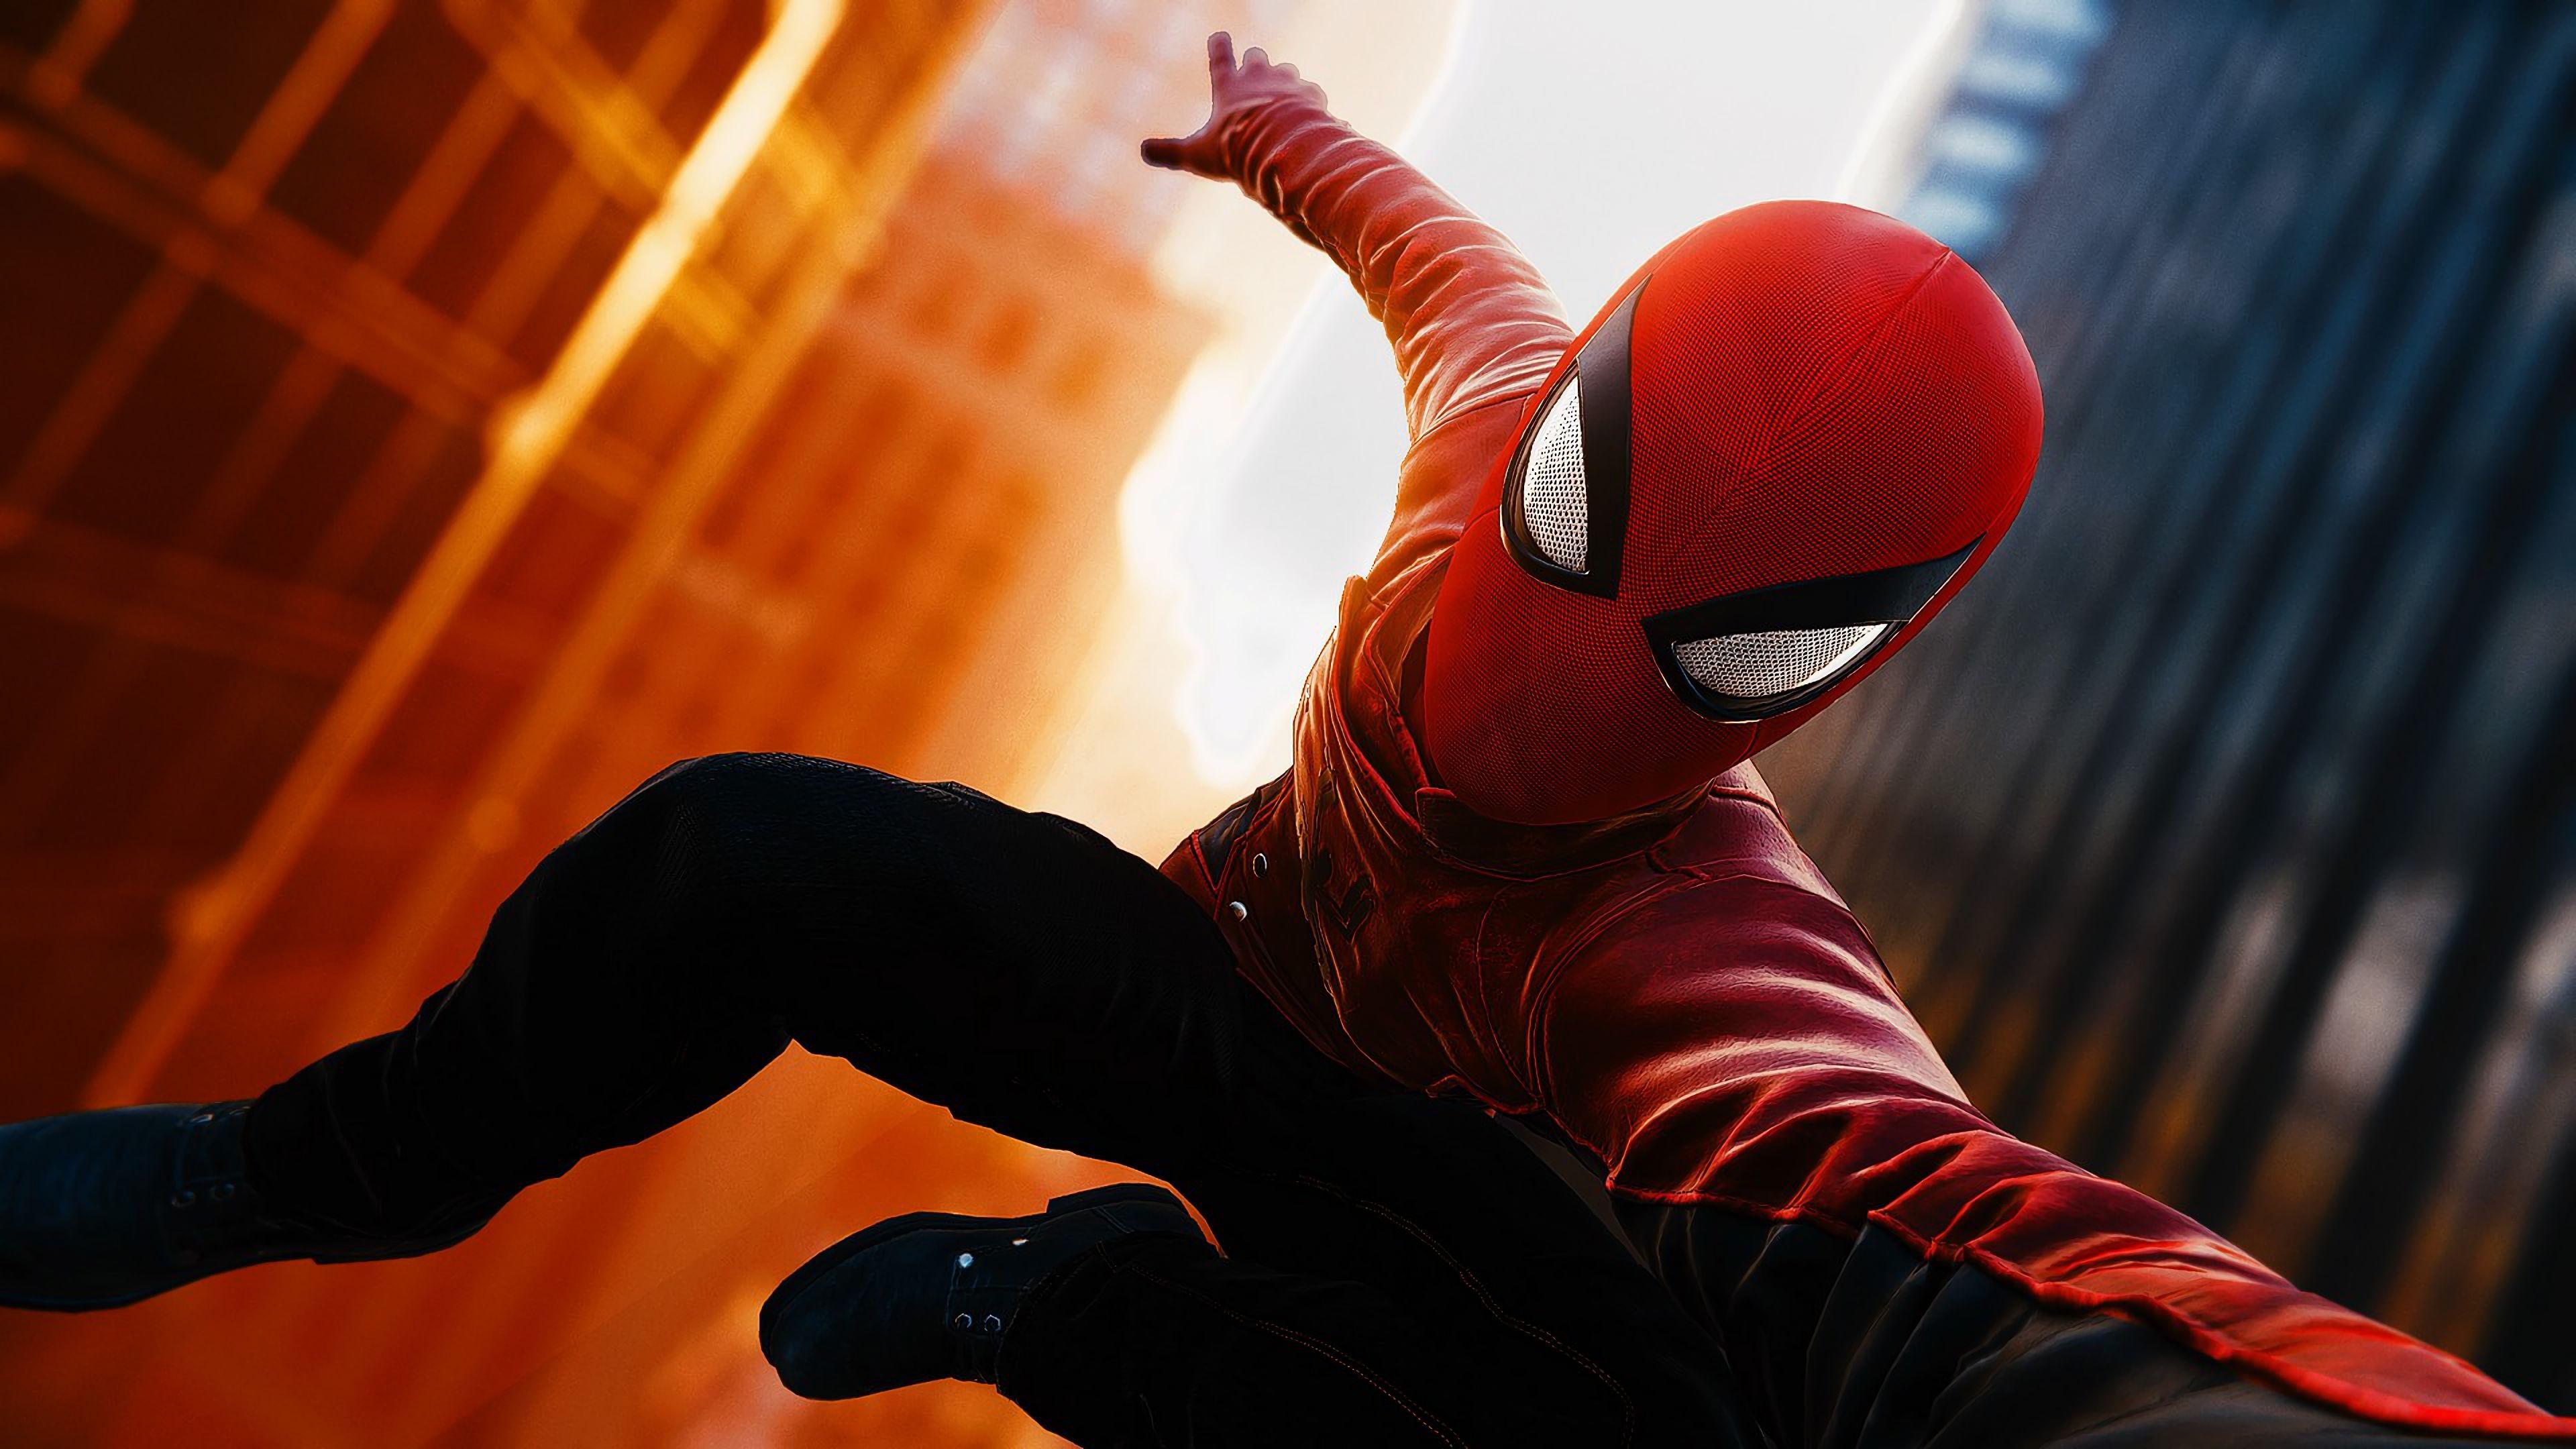 PS4 #SpiderMan. Wallpaper. Spiderman ps4 wallpaper